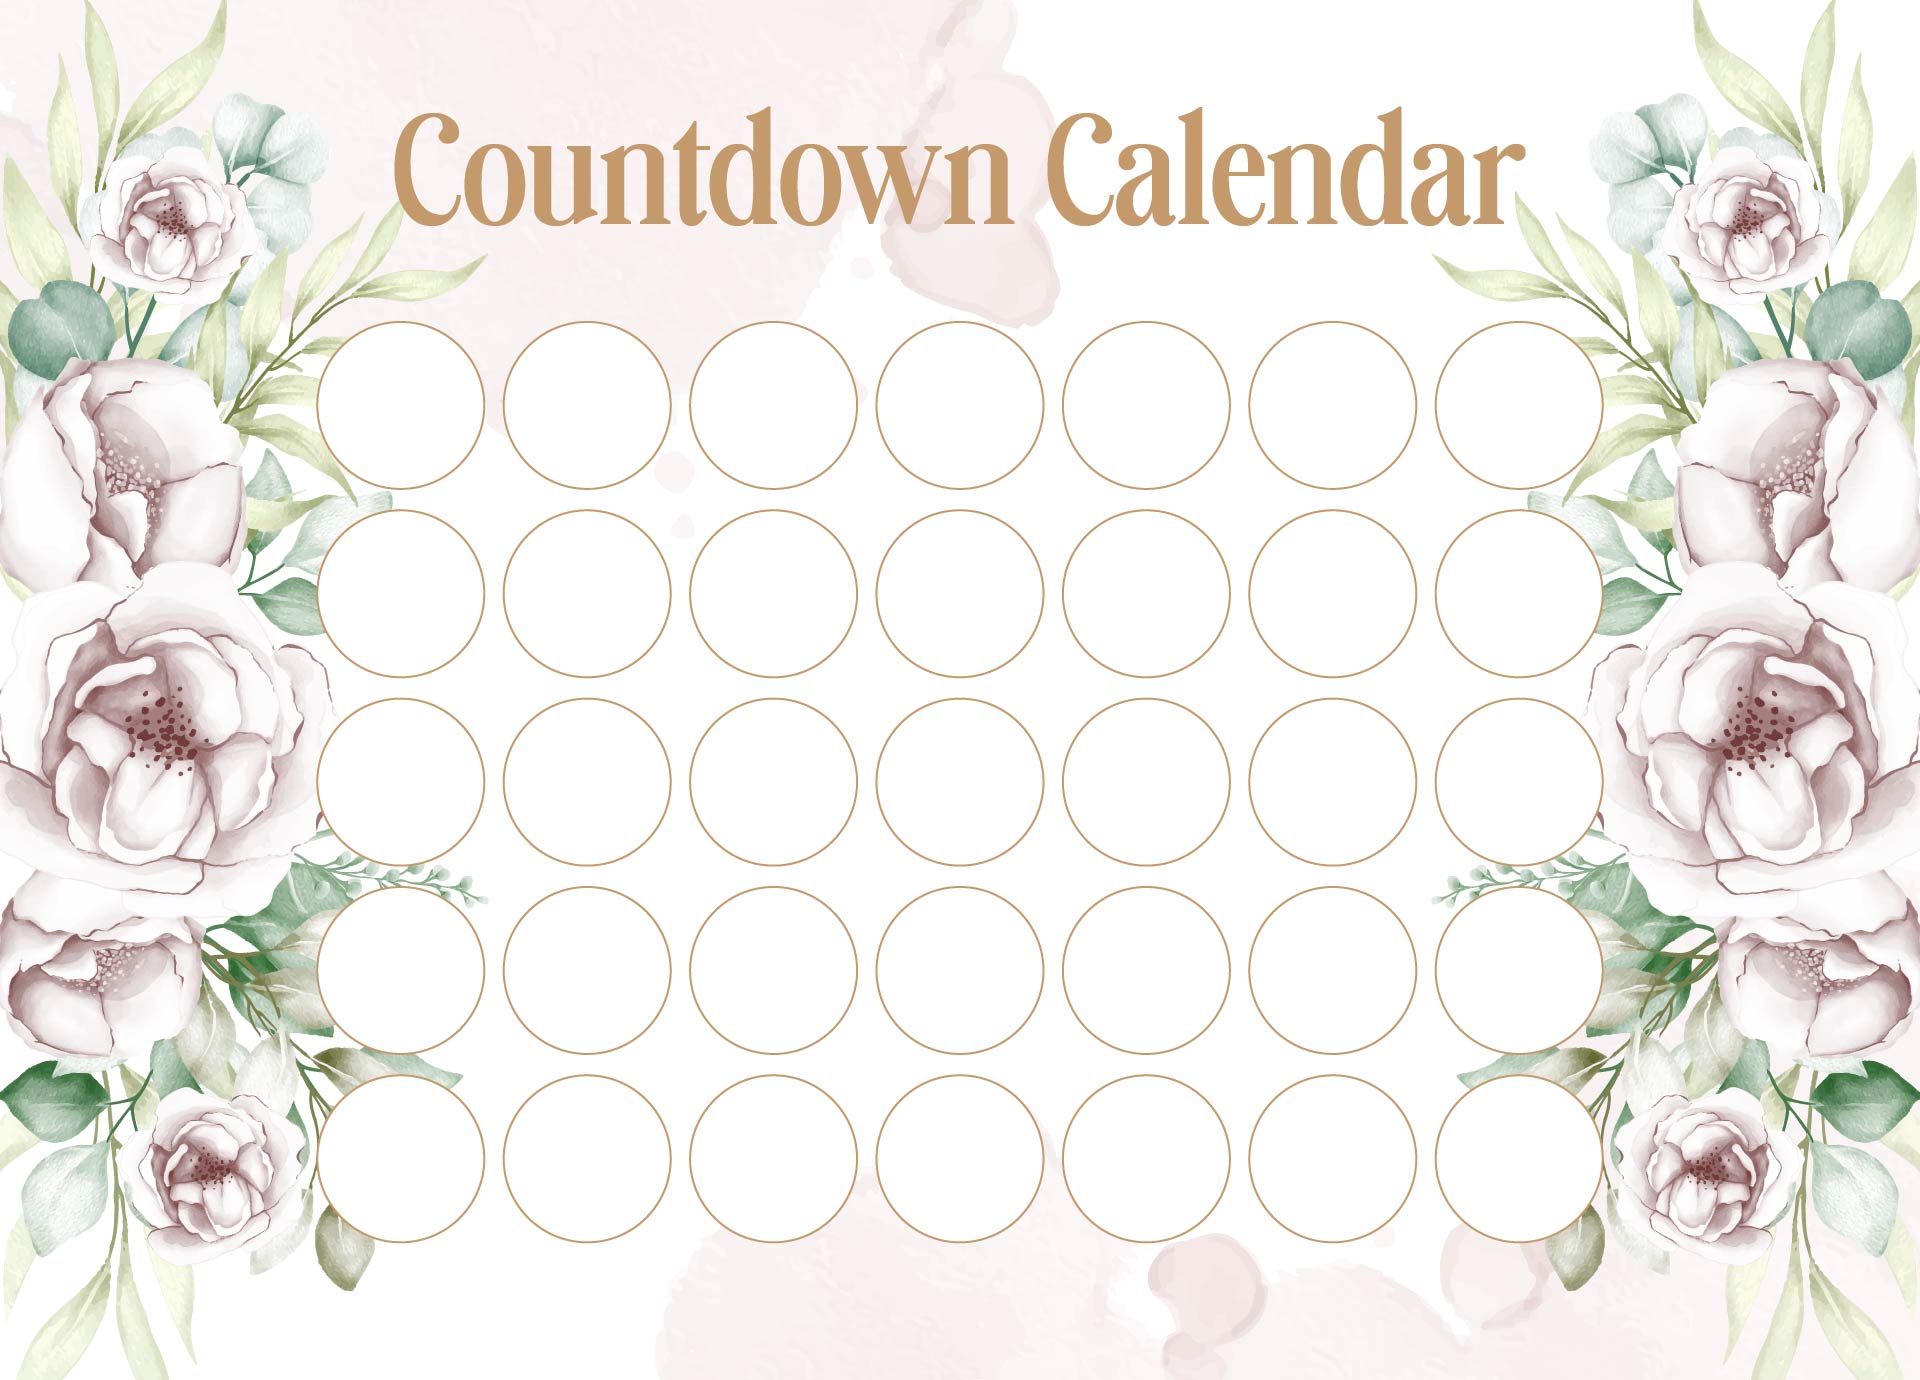 Countdown Calendar Template